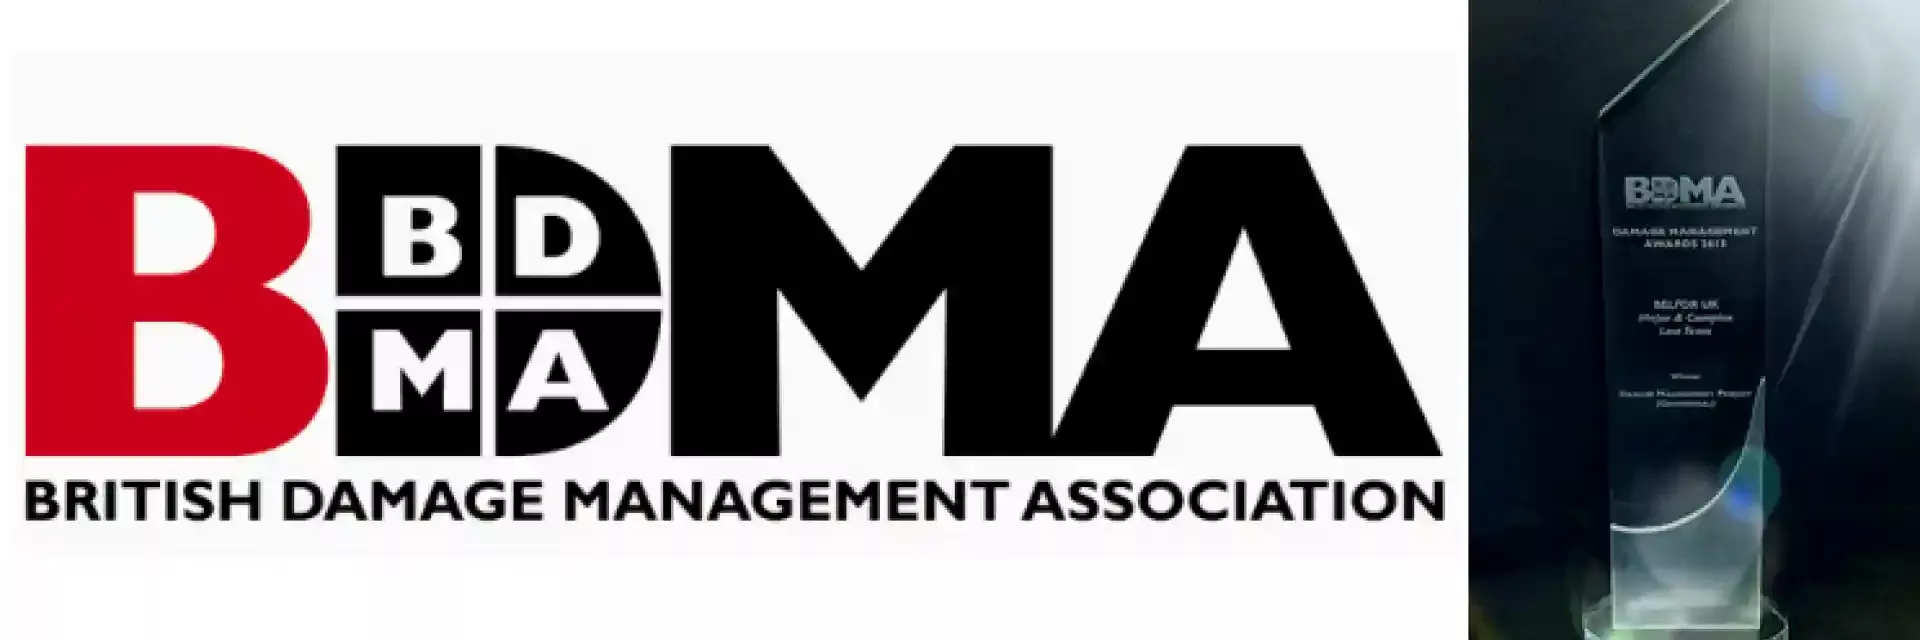 BDMA logo